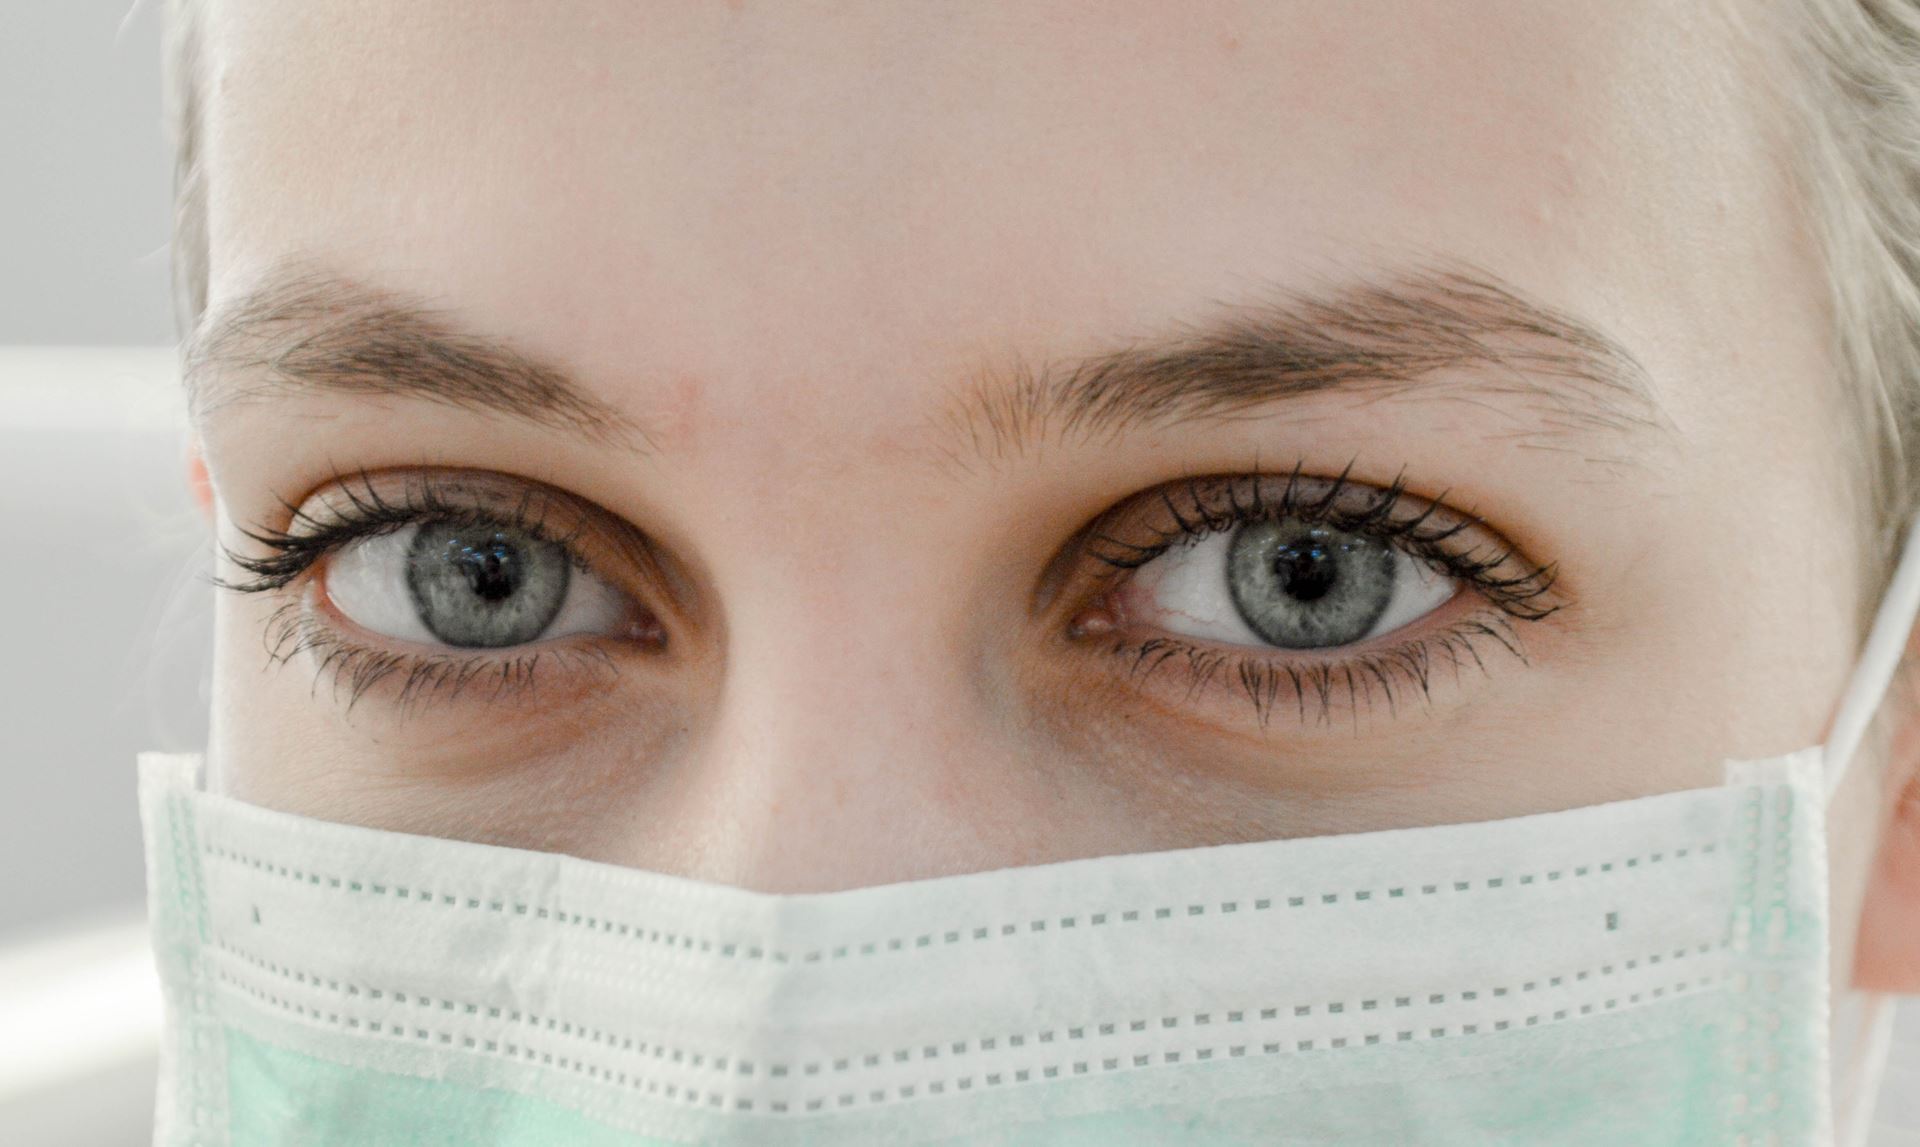 eyes of nurse wearing a mask